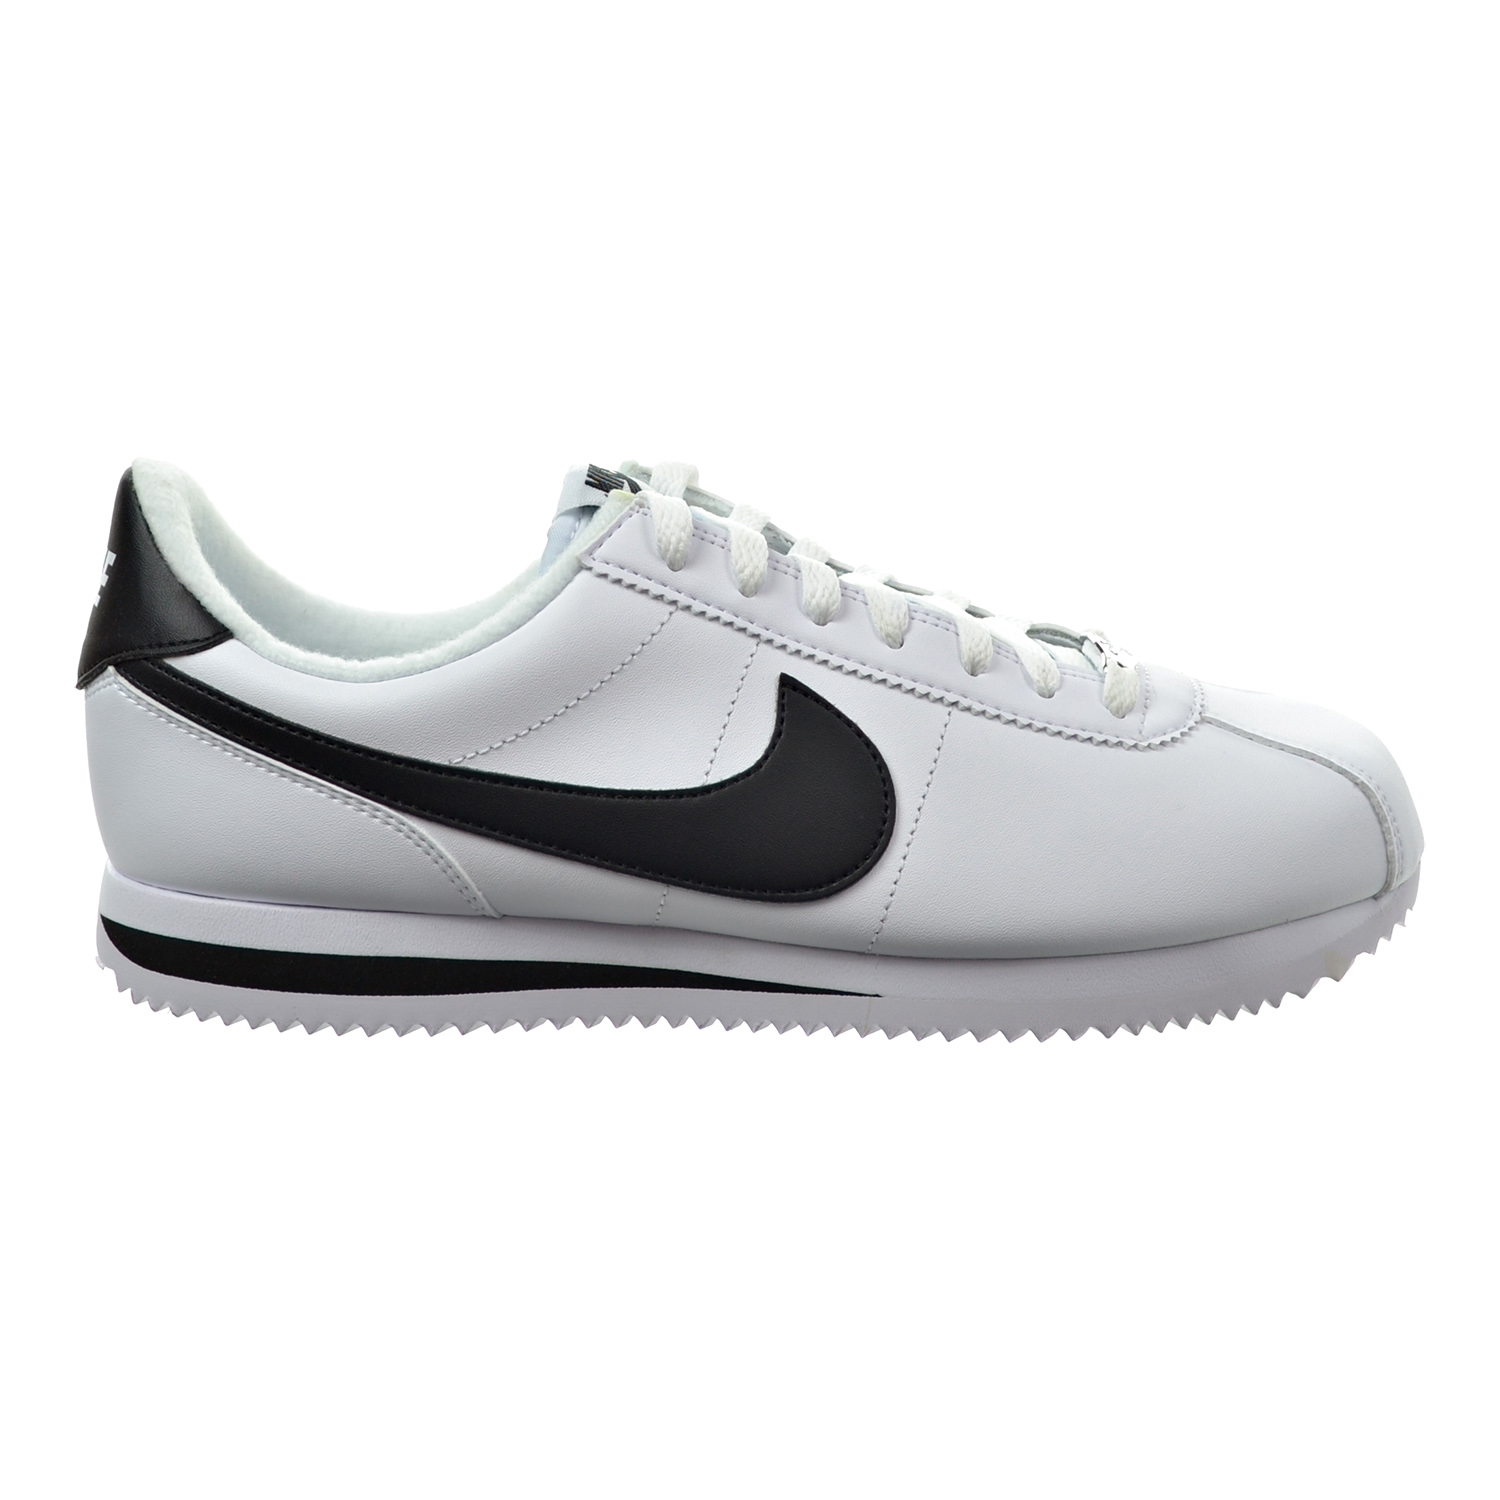 storting Aan boord Maken Nike Cortez Basic Leather Men's Shoes White/Metallic Silver/Black  819719-100 (8.5 D(M) US)